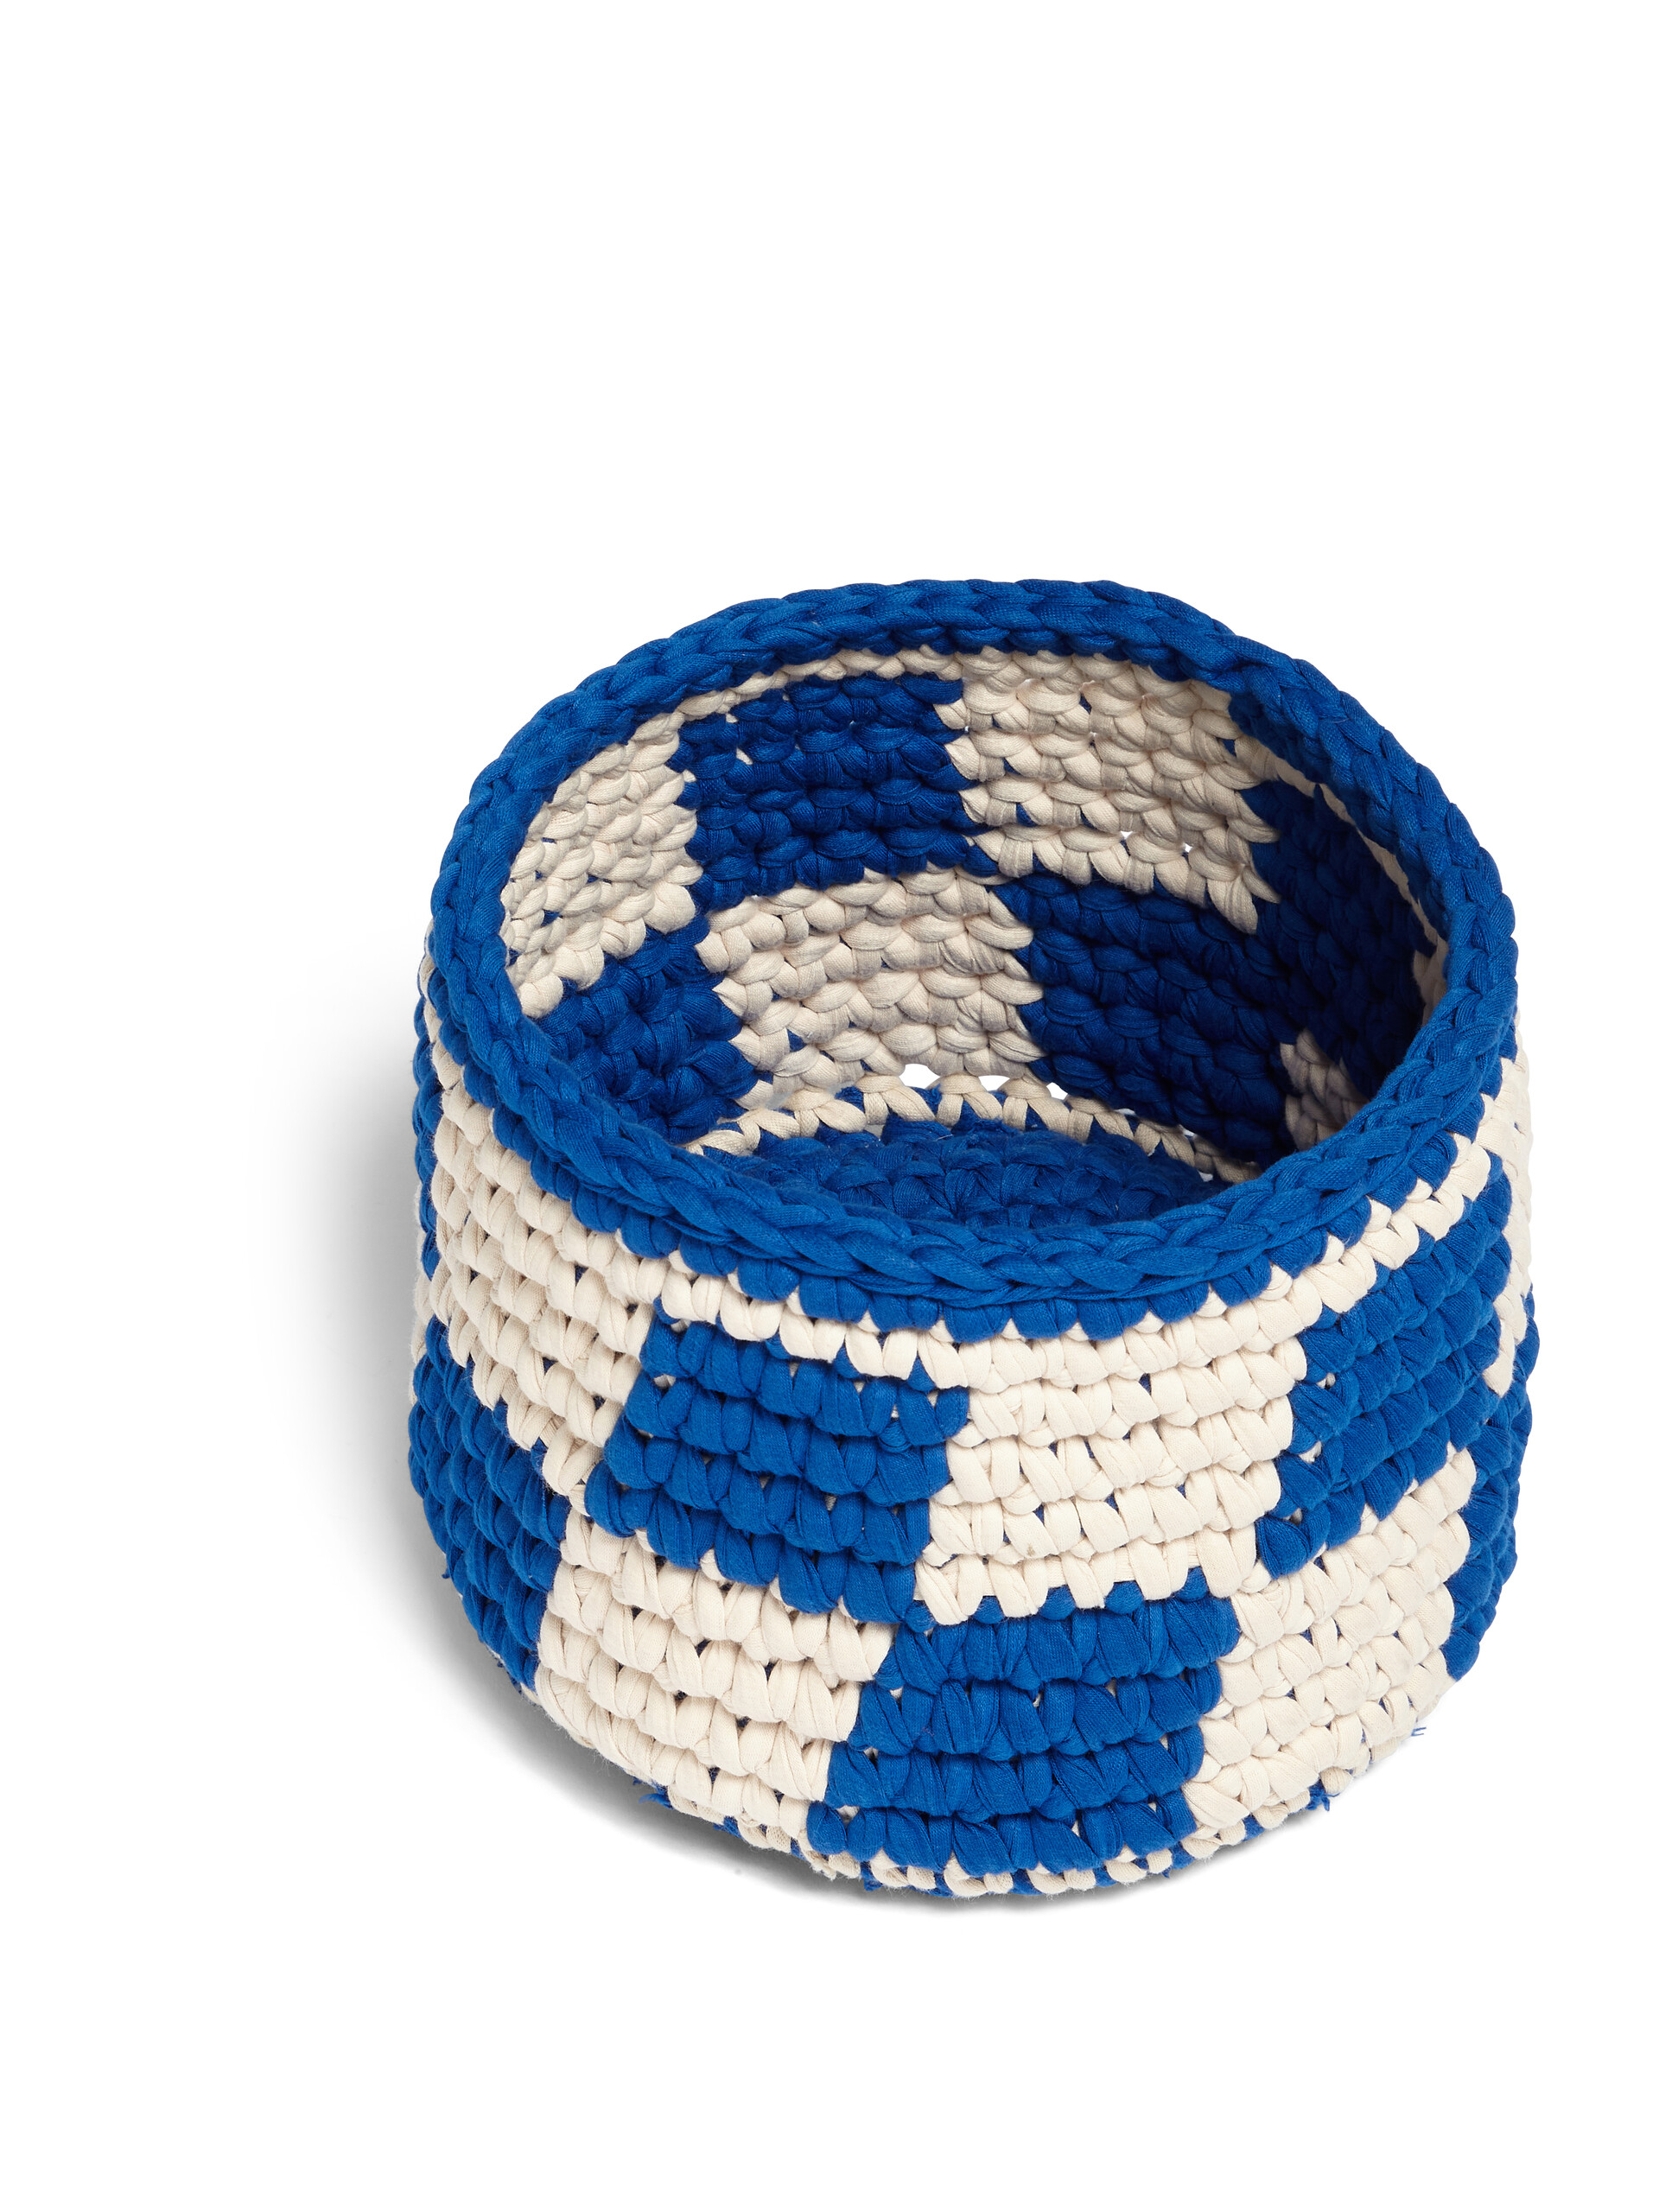 Small MARNI MARKET vase holder in white and blue crochet - Furniture - Image 3